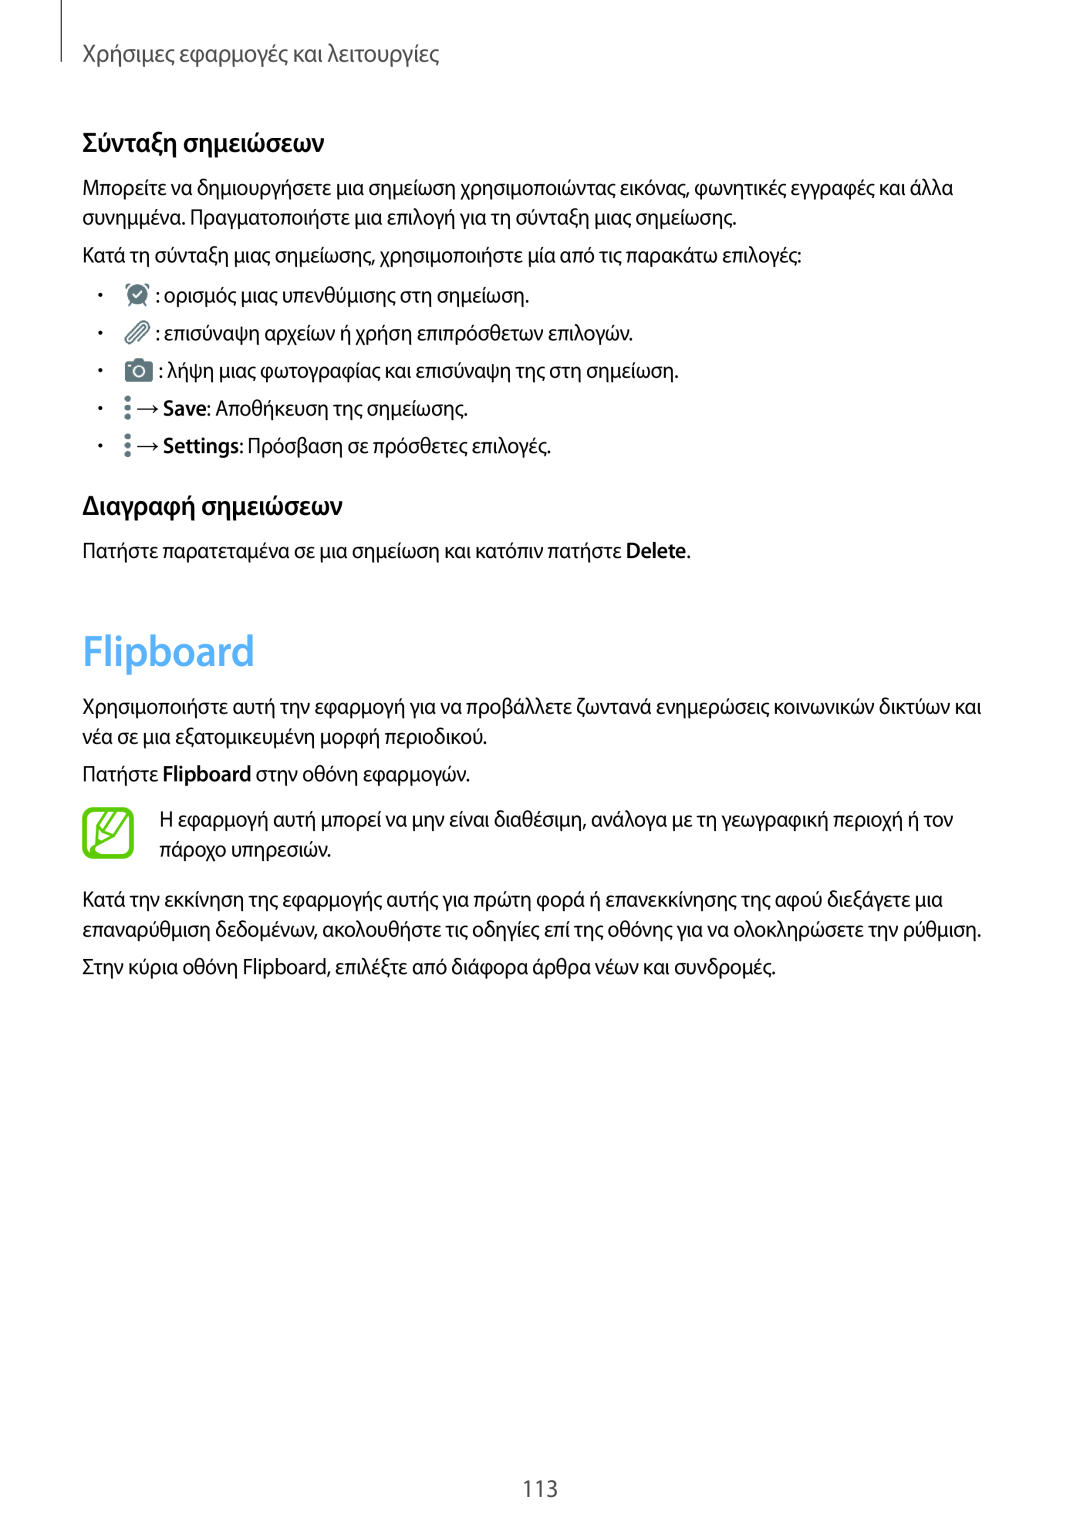 Samsung SM-T705NZWAEUR manual Flipboard, Σύνταξη σημειώσεων, Διαγραφή σημειώσεων, Χρήσιμες εφαρμογές και λειτουργίες 